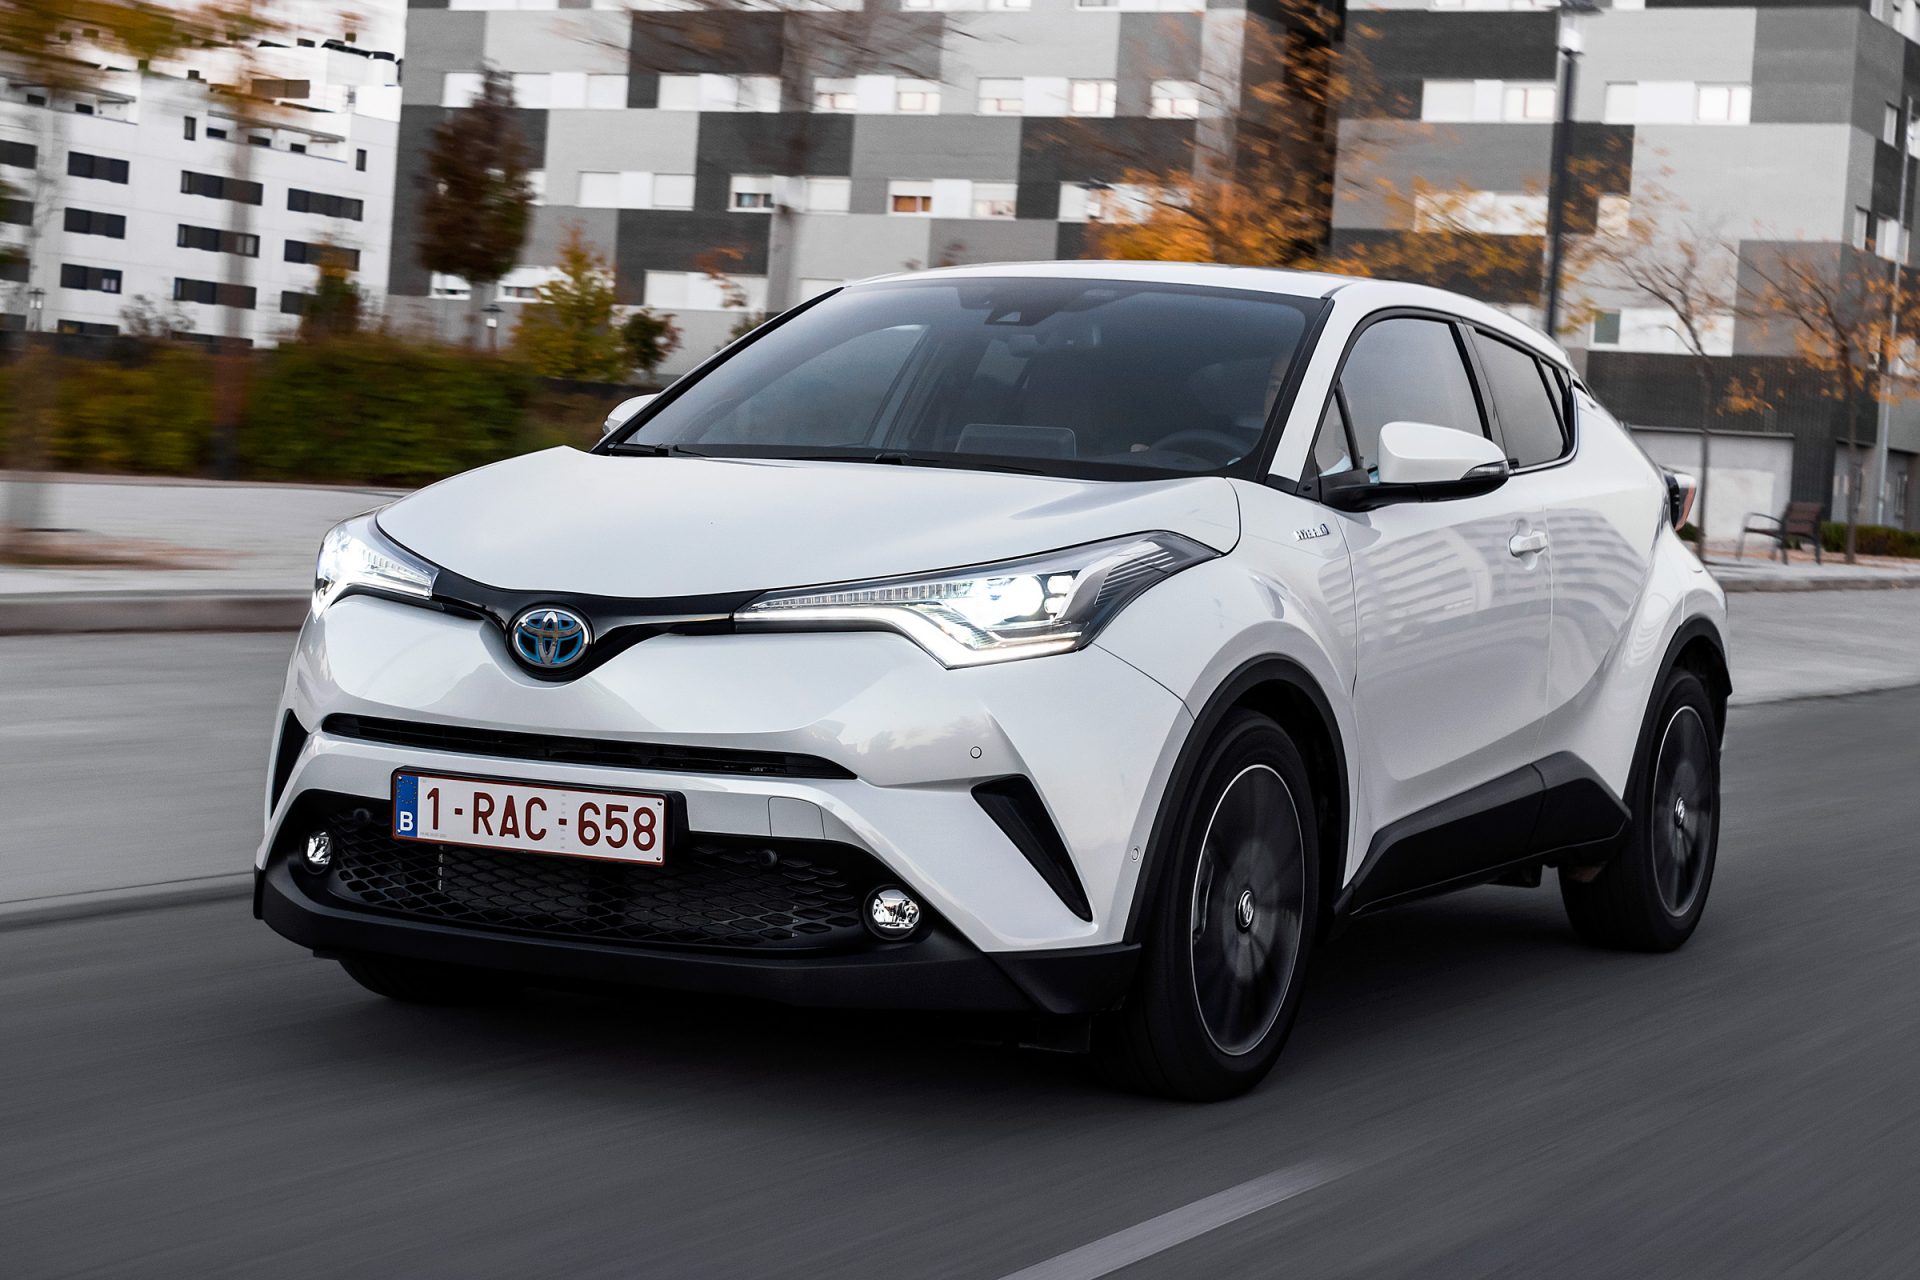 Toyota C-HR Hybrid Price in Pakistan 2018 Spec Features Fuel Consumption Reviews Pictures